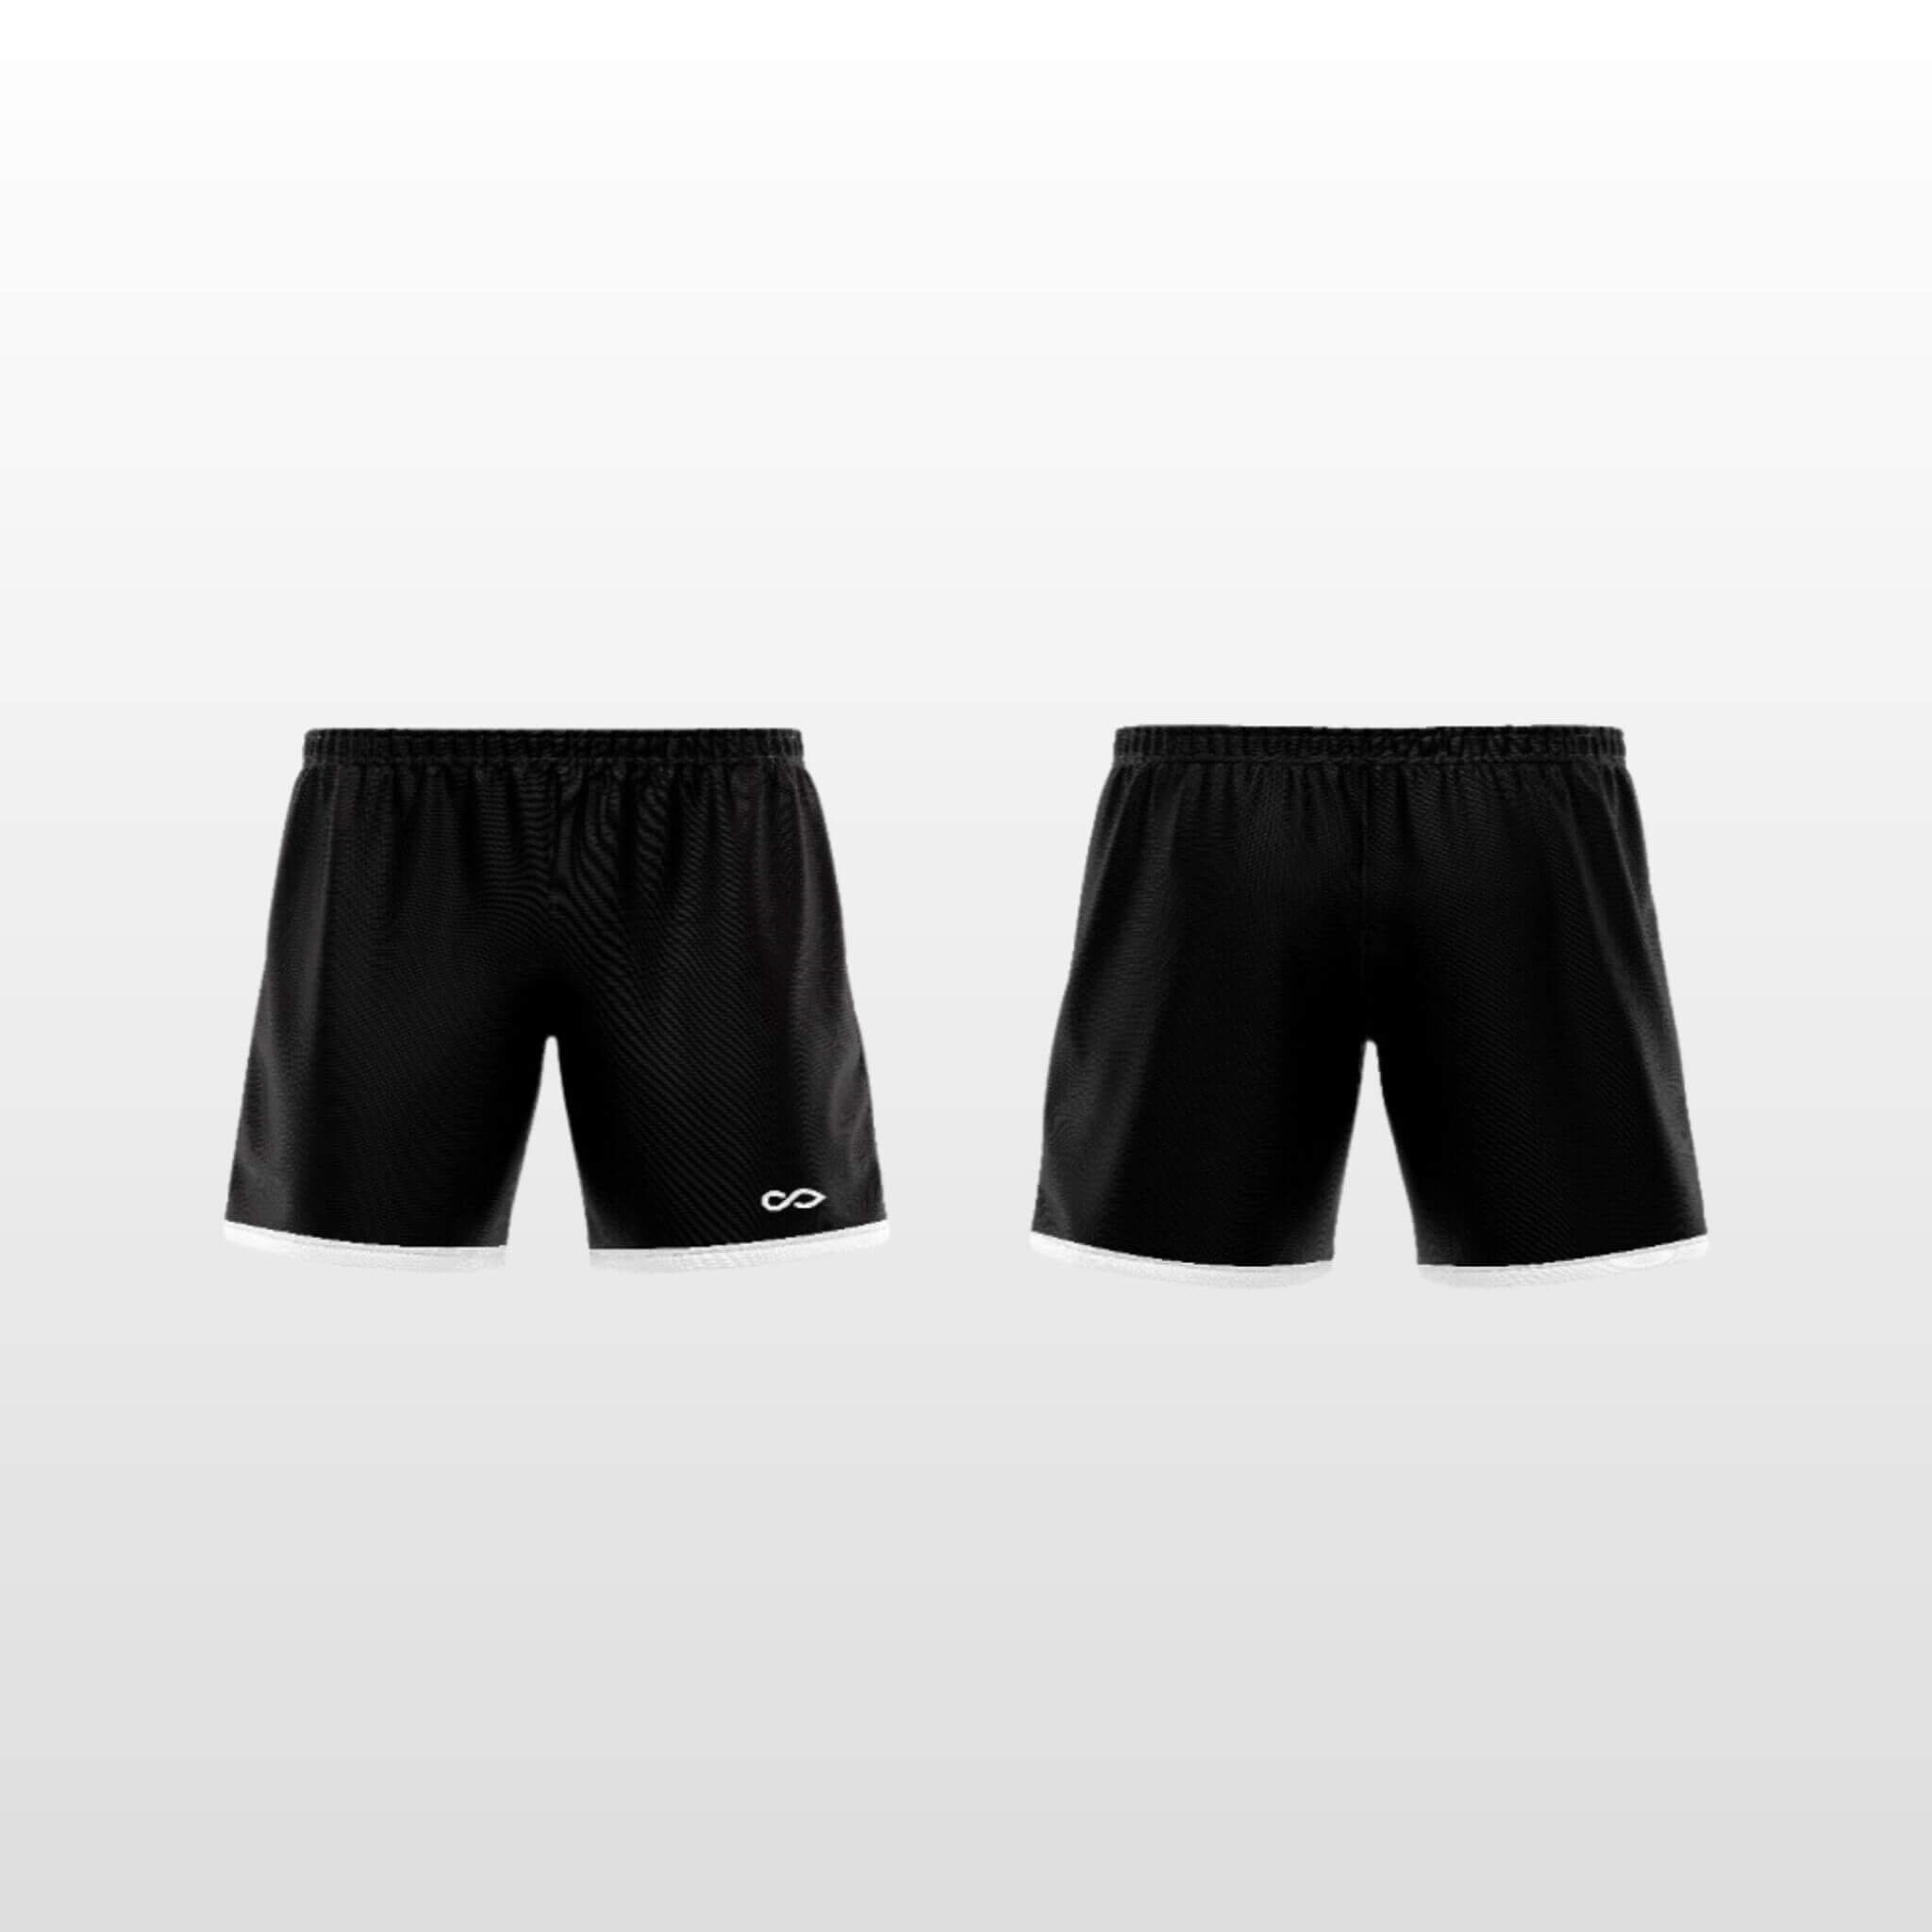 CORE Focus training shorts Jr - Black